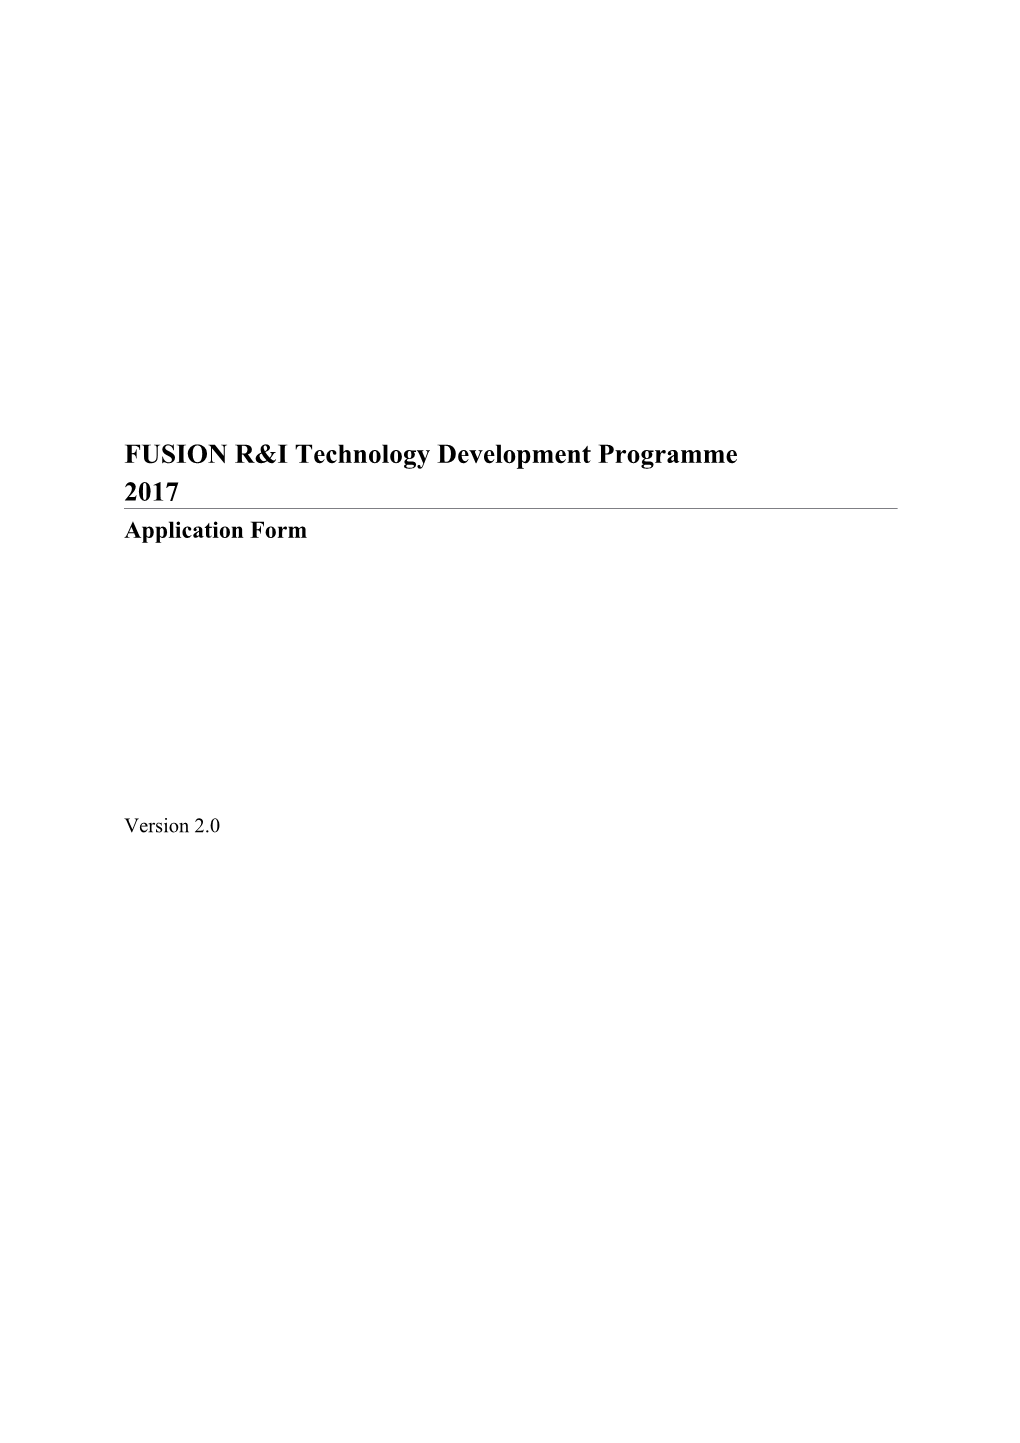 FUSION R&I Technology Development Programme